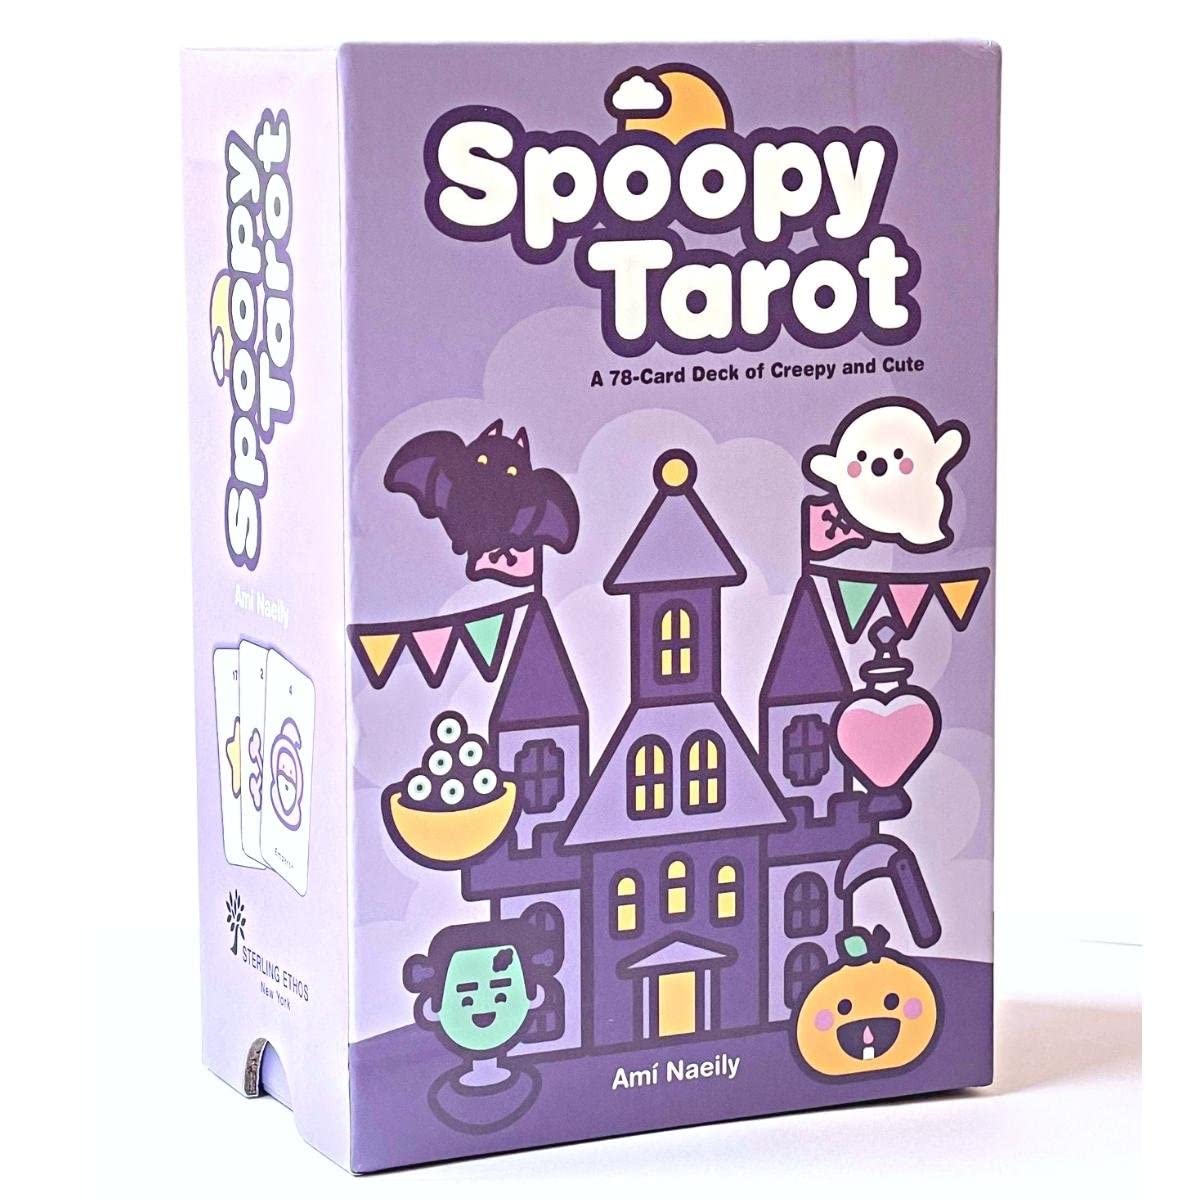 Spoopy Tarot Deck: A 78-Card Deck of Creepy and Cute